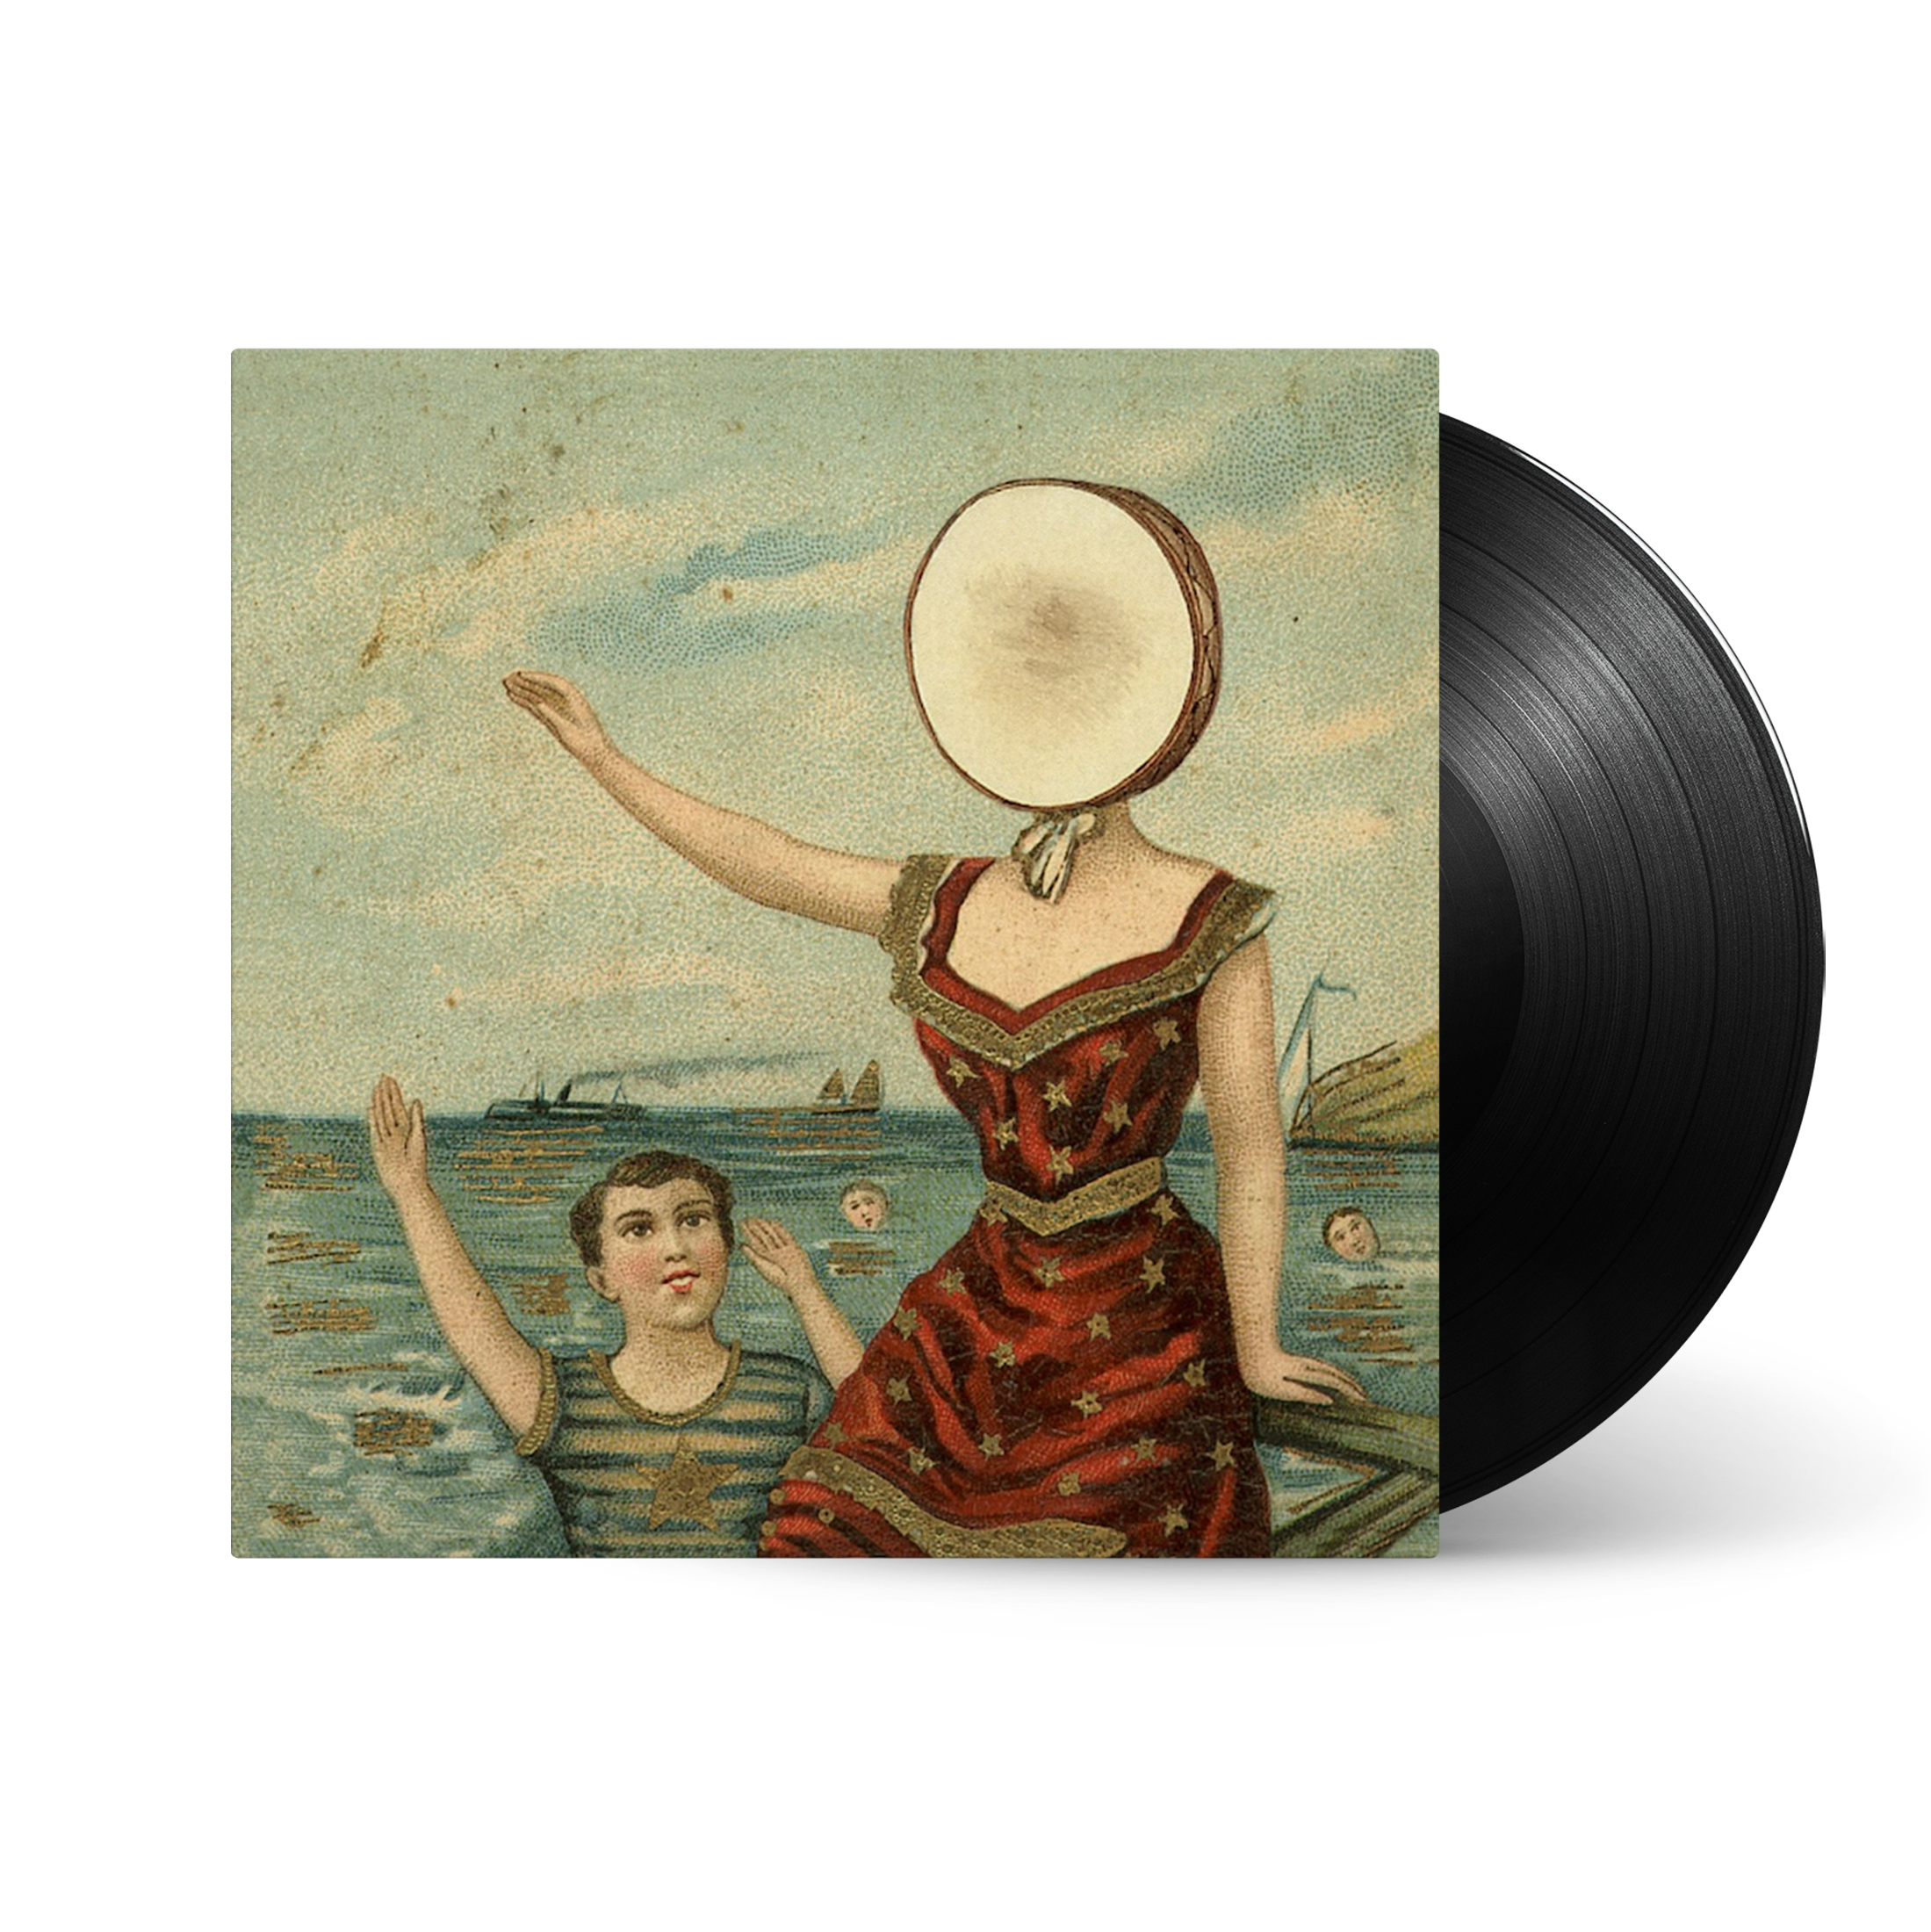 Neutral Milk Hotel - In the Aeroplane Over the Sea: Vinyl LP